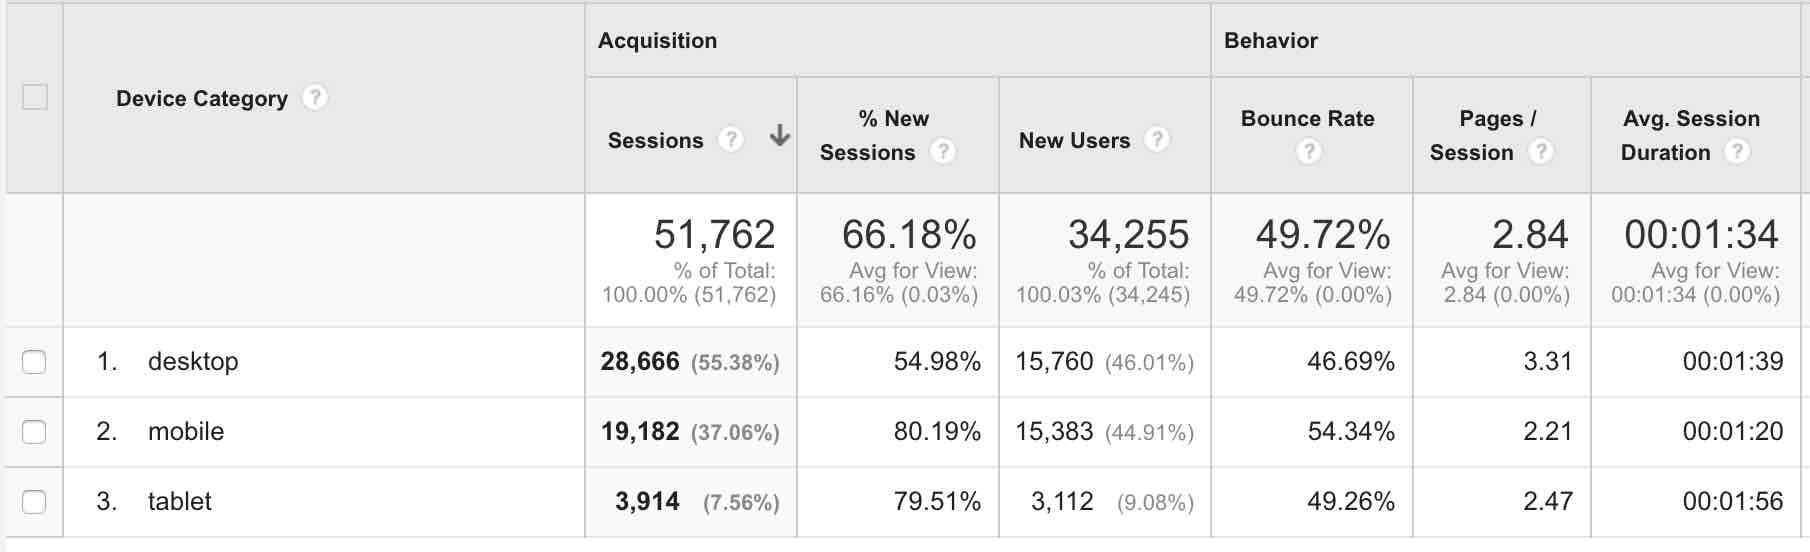 Sample Google Analytics Report